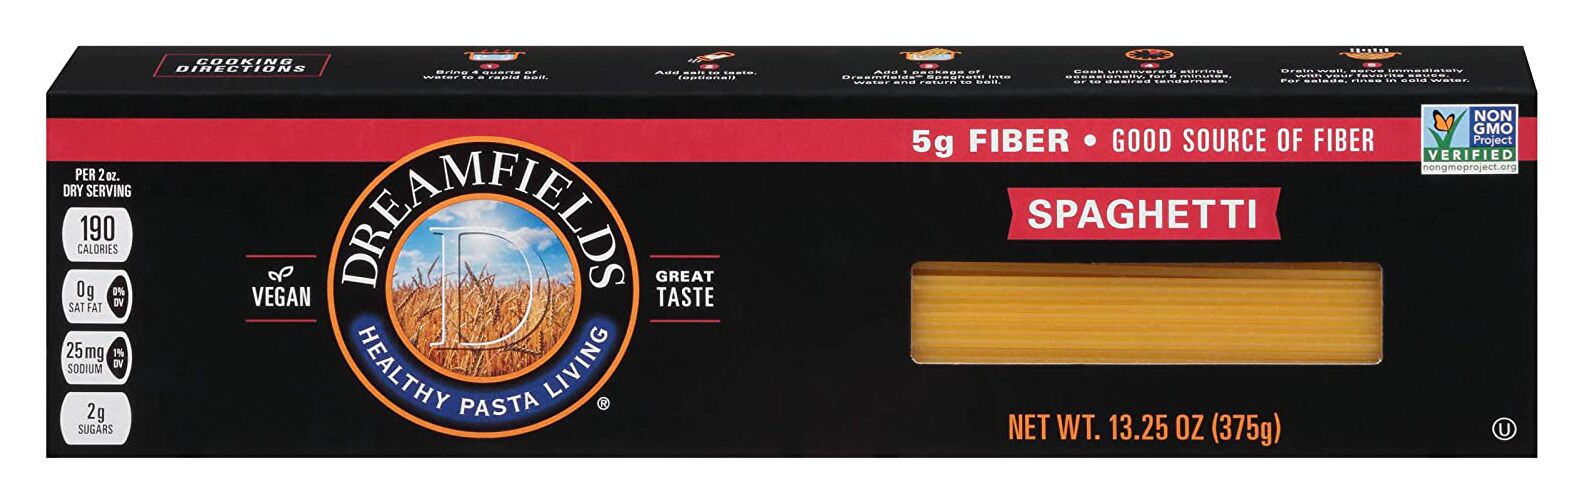 #Flavor_Spaghetti #Size_20 Boxes